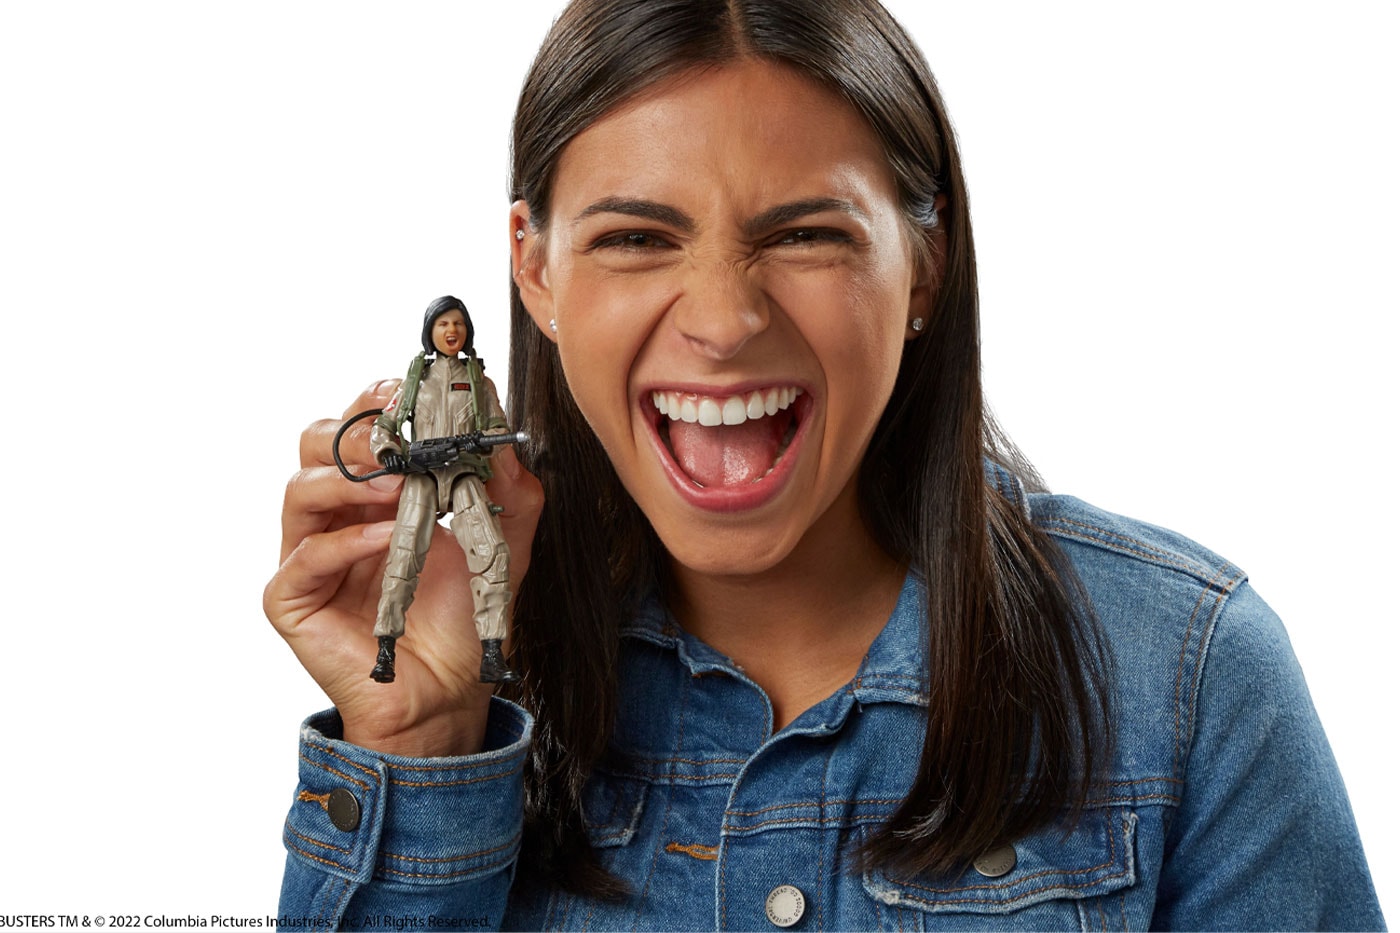 Action Figure Hasbro New Selfie Series launch release info date price 